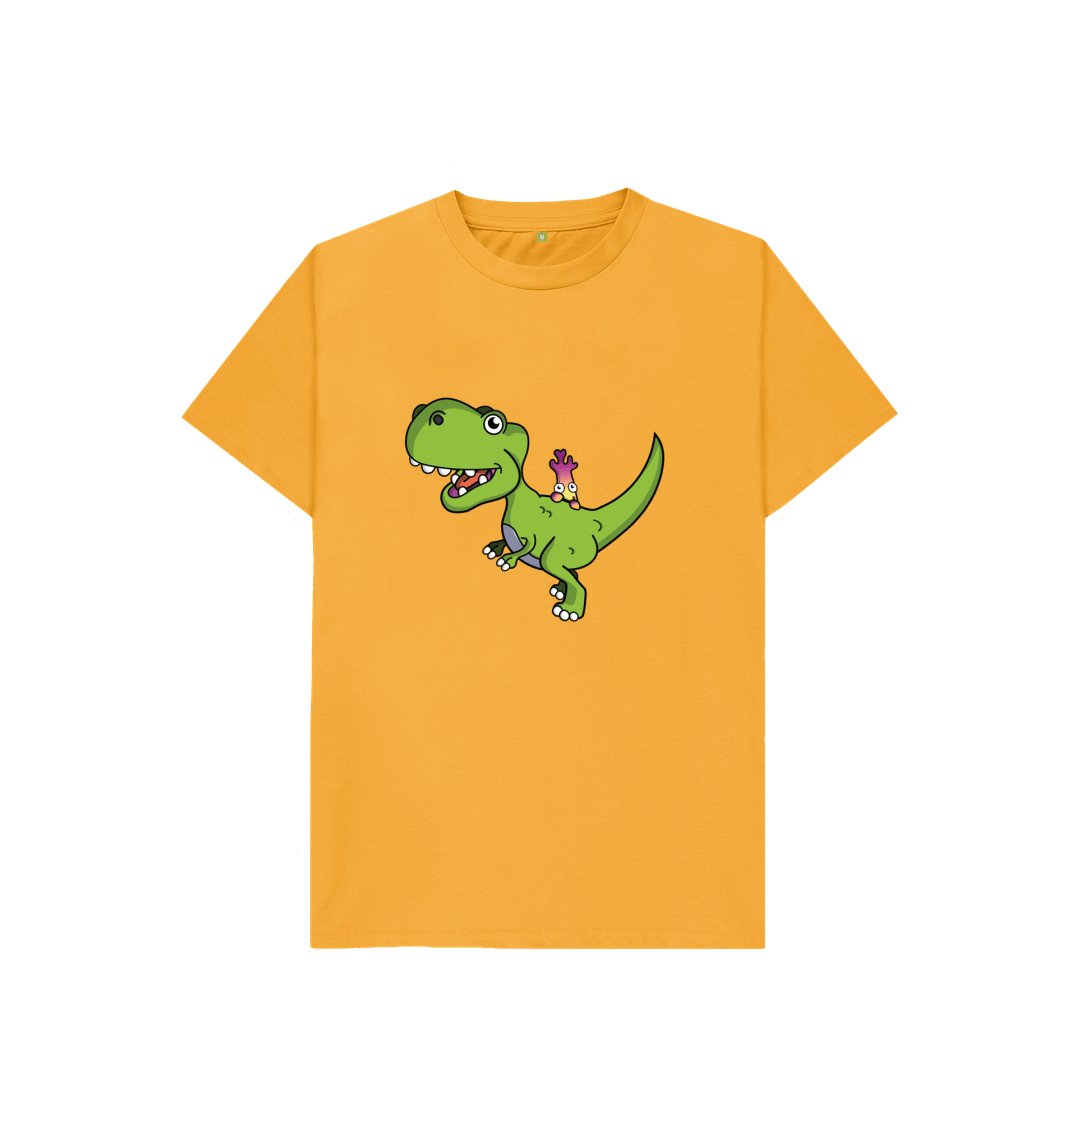 Mustard Organic Cotton Shy-nosaur Dinosaur Graphic Only Mental Health Children's T-Shirt